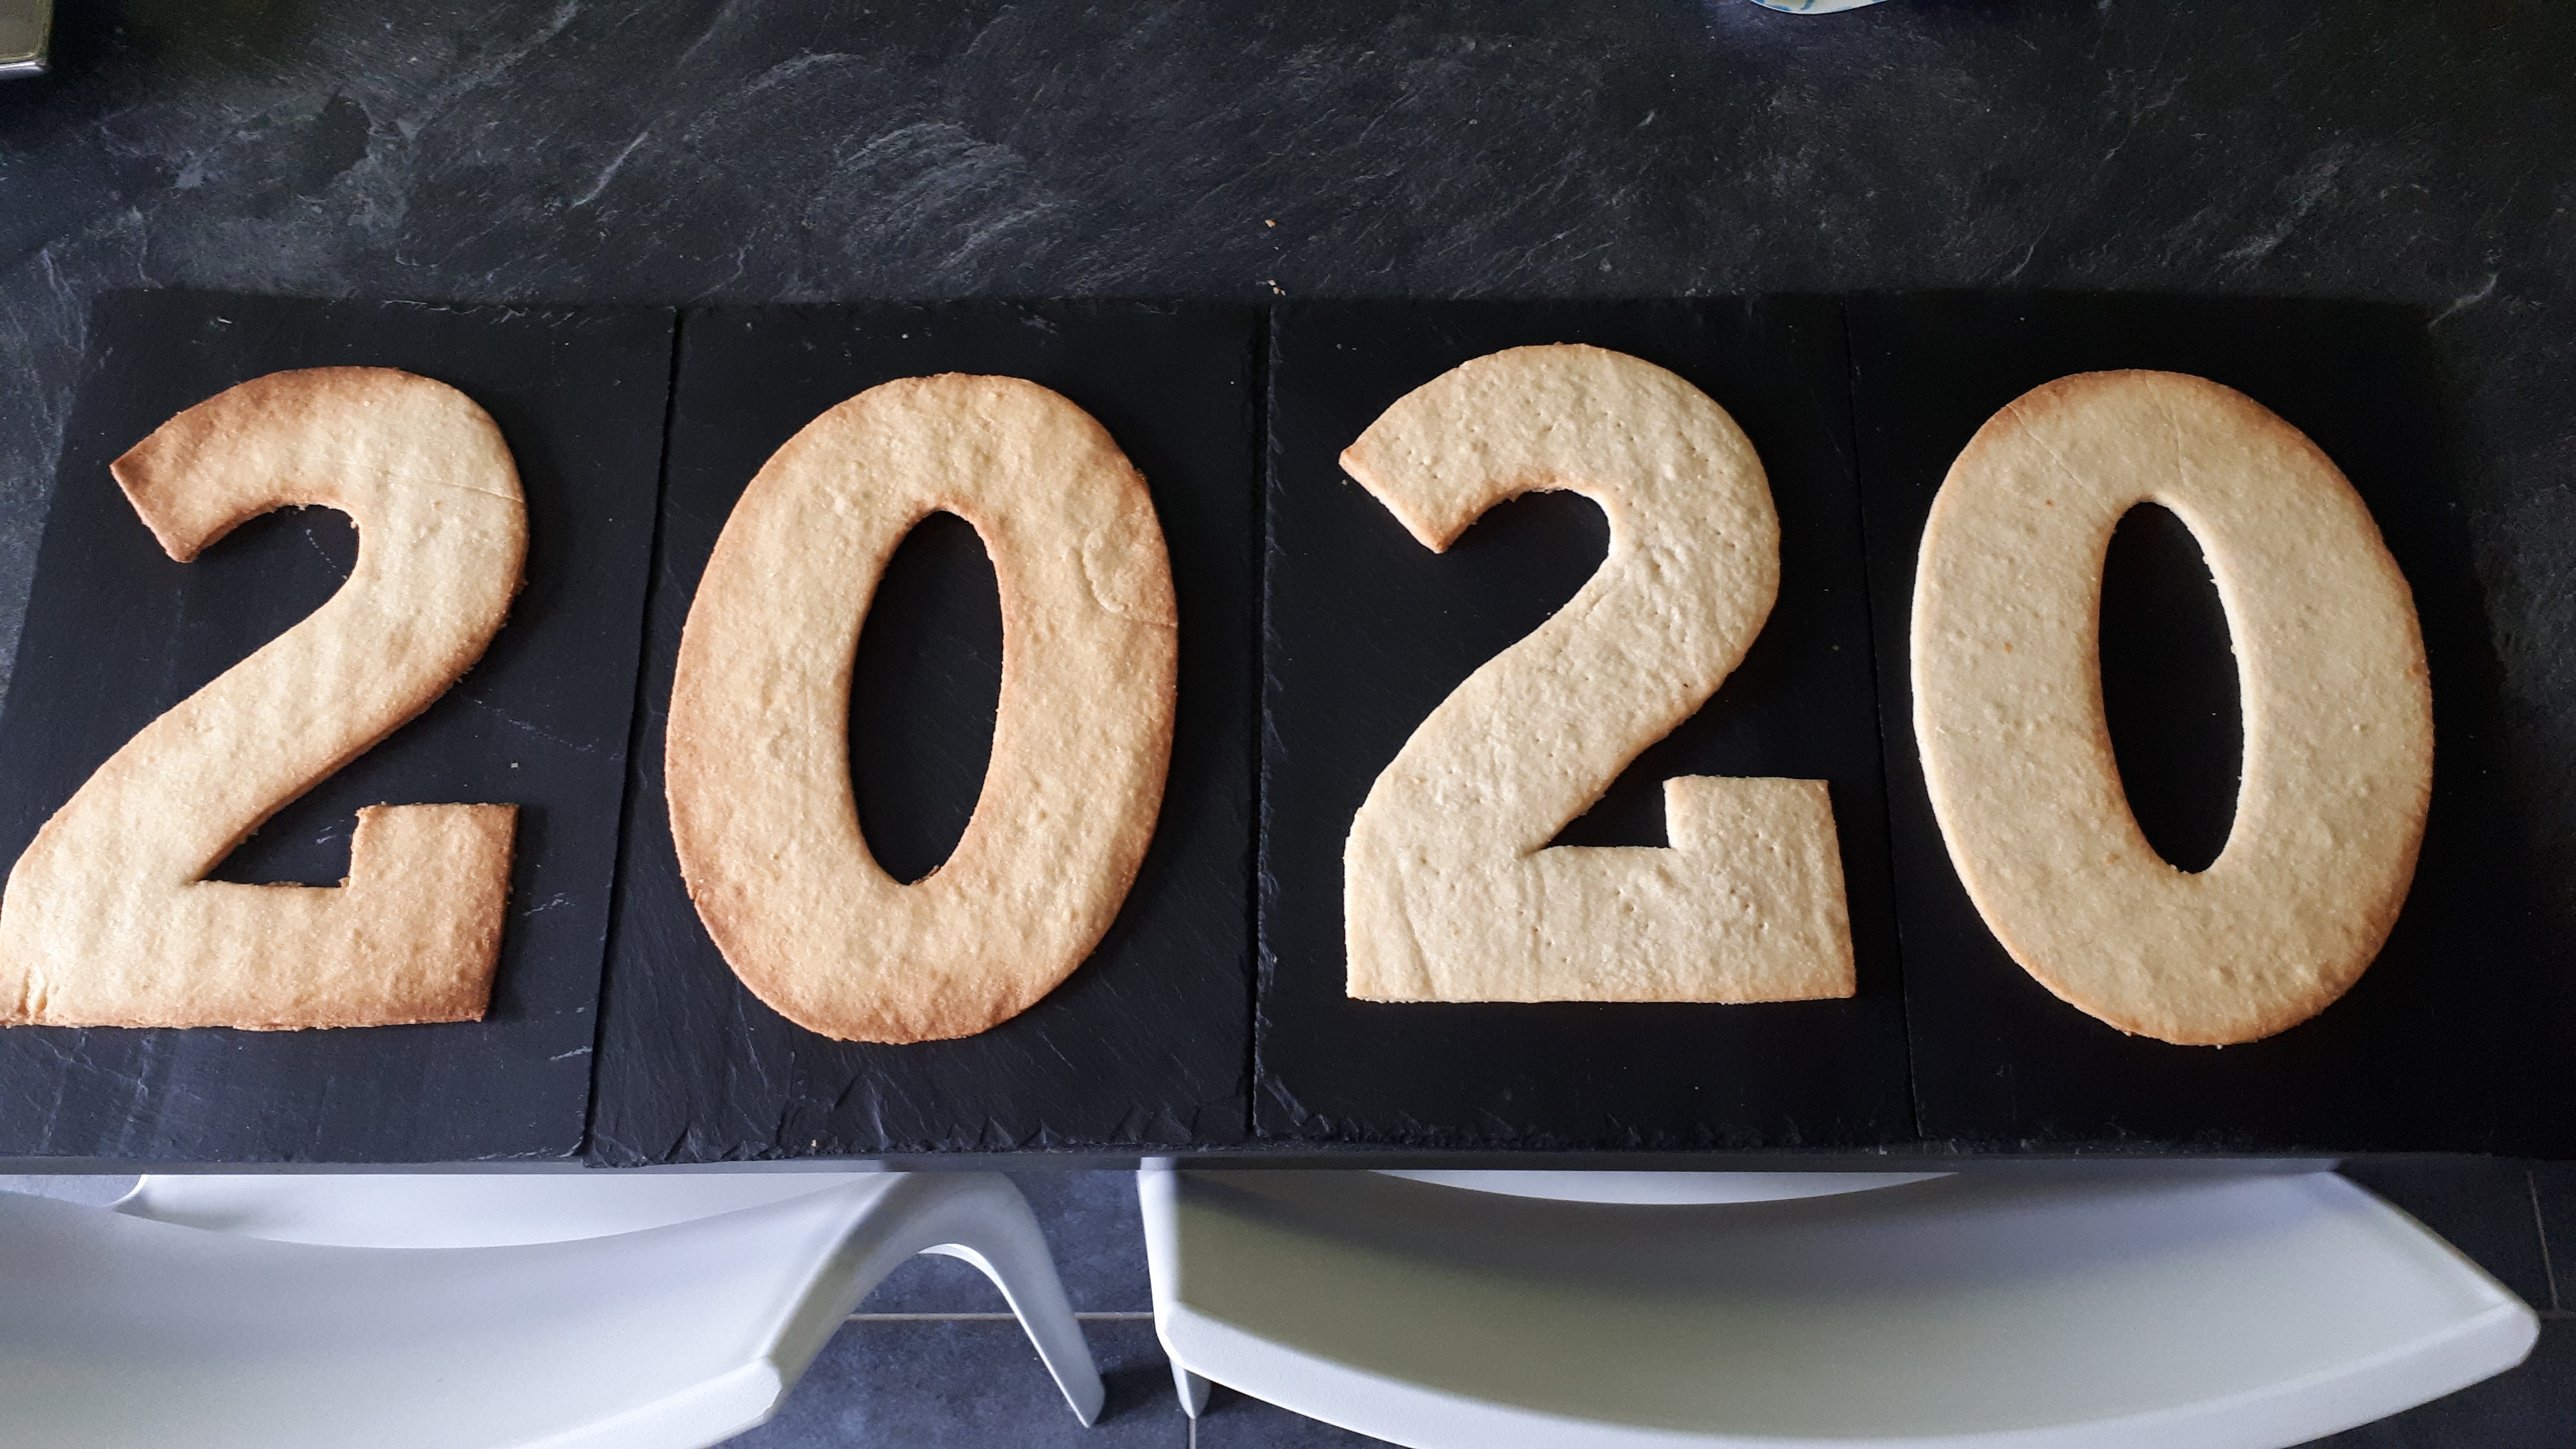 Number cake 2020